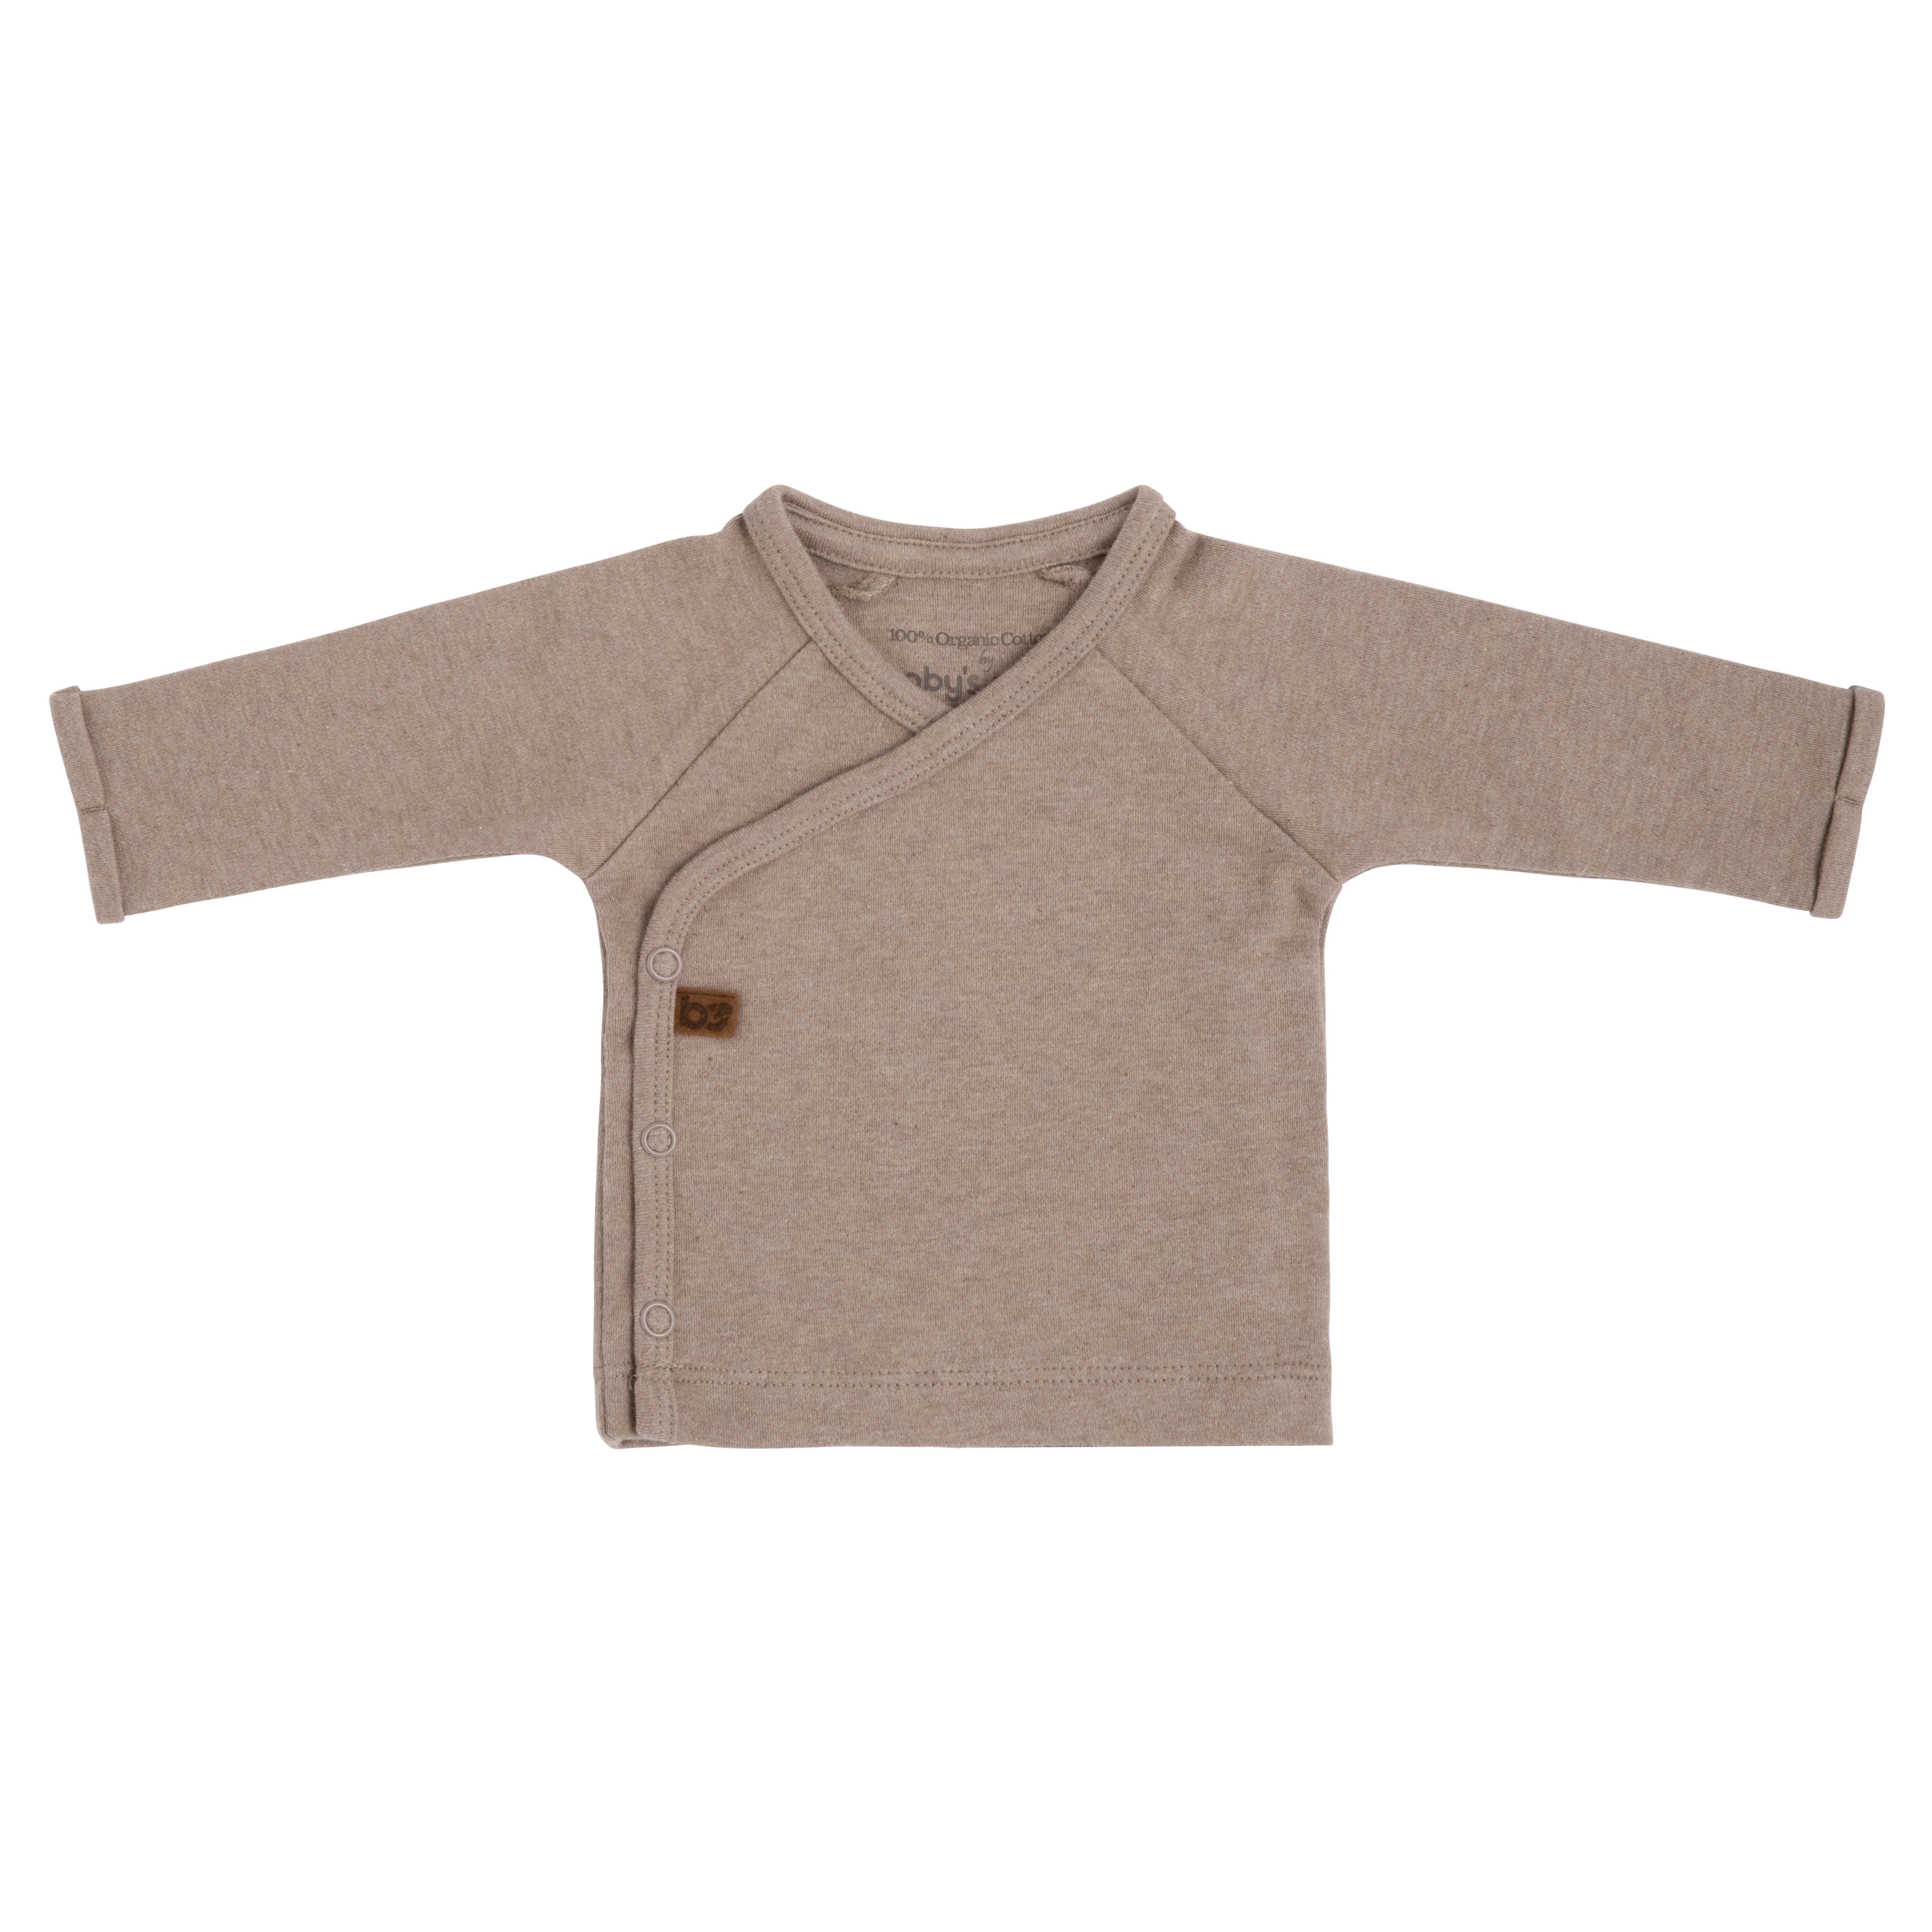 Wrap sweater Melange clay - 44